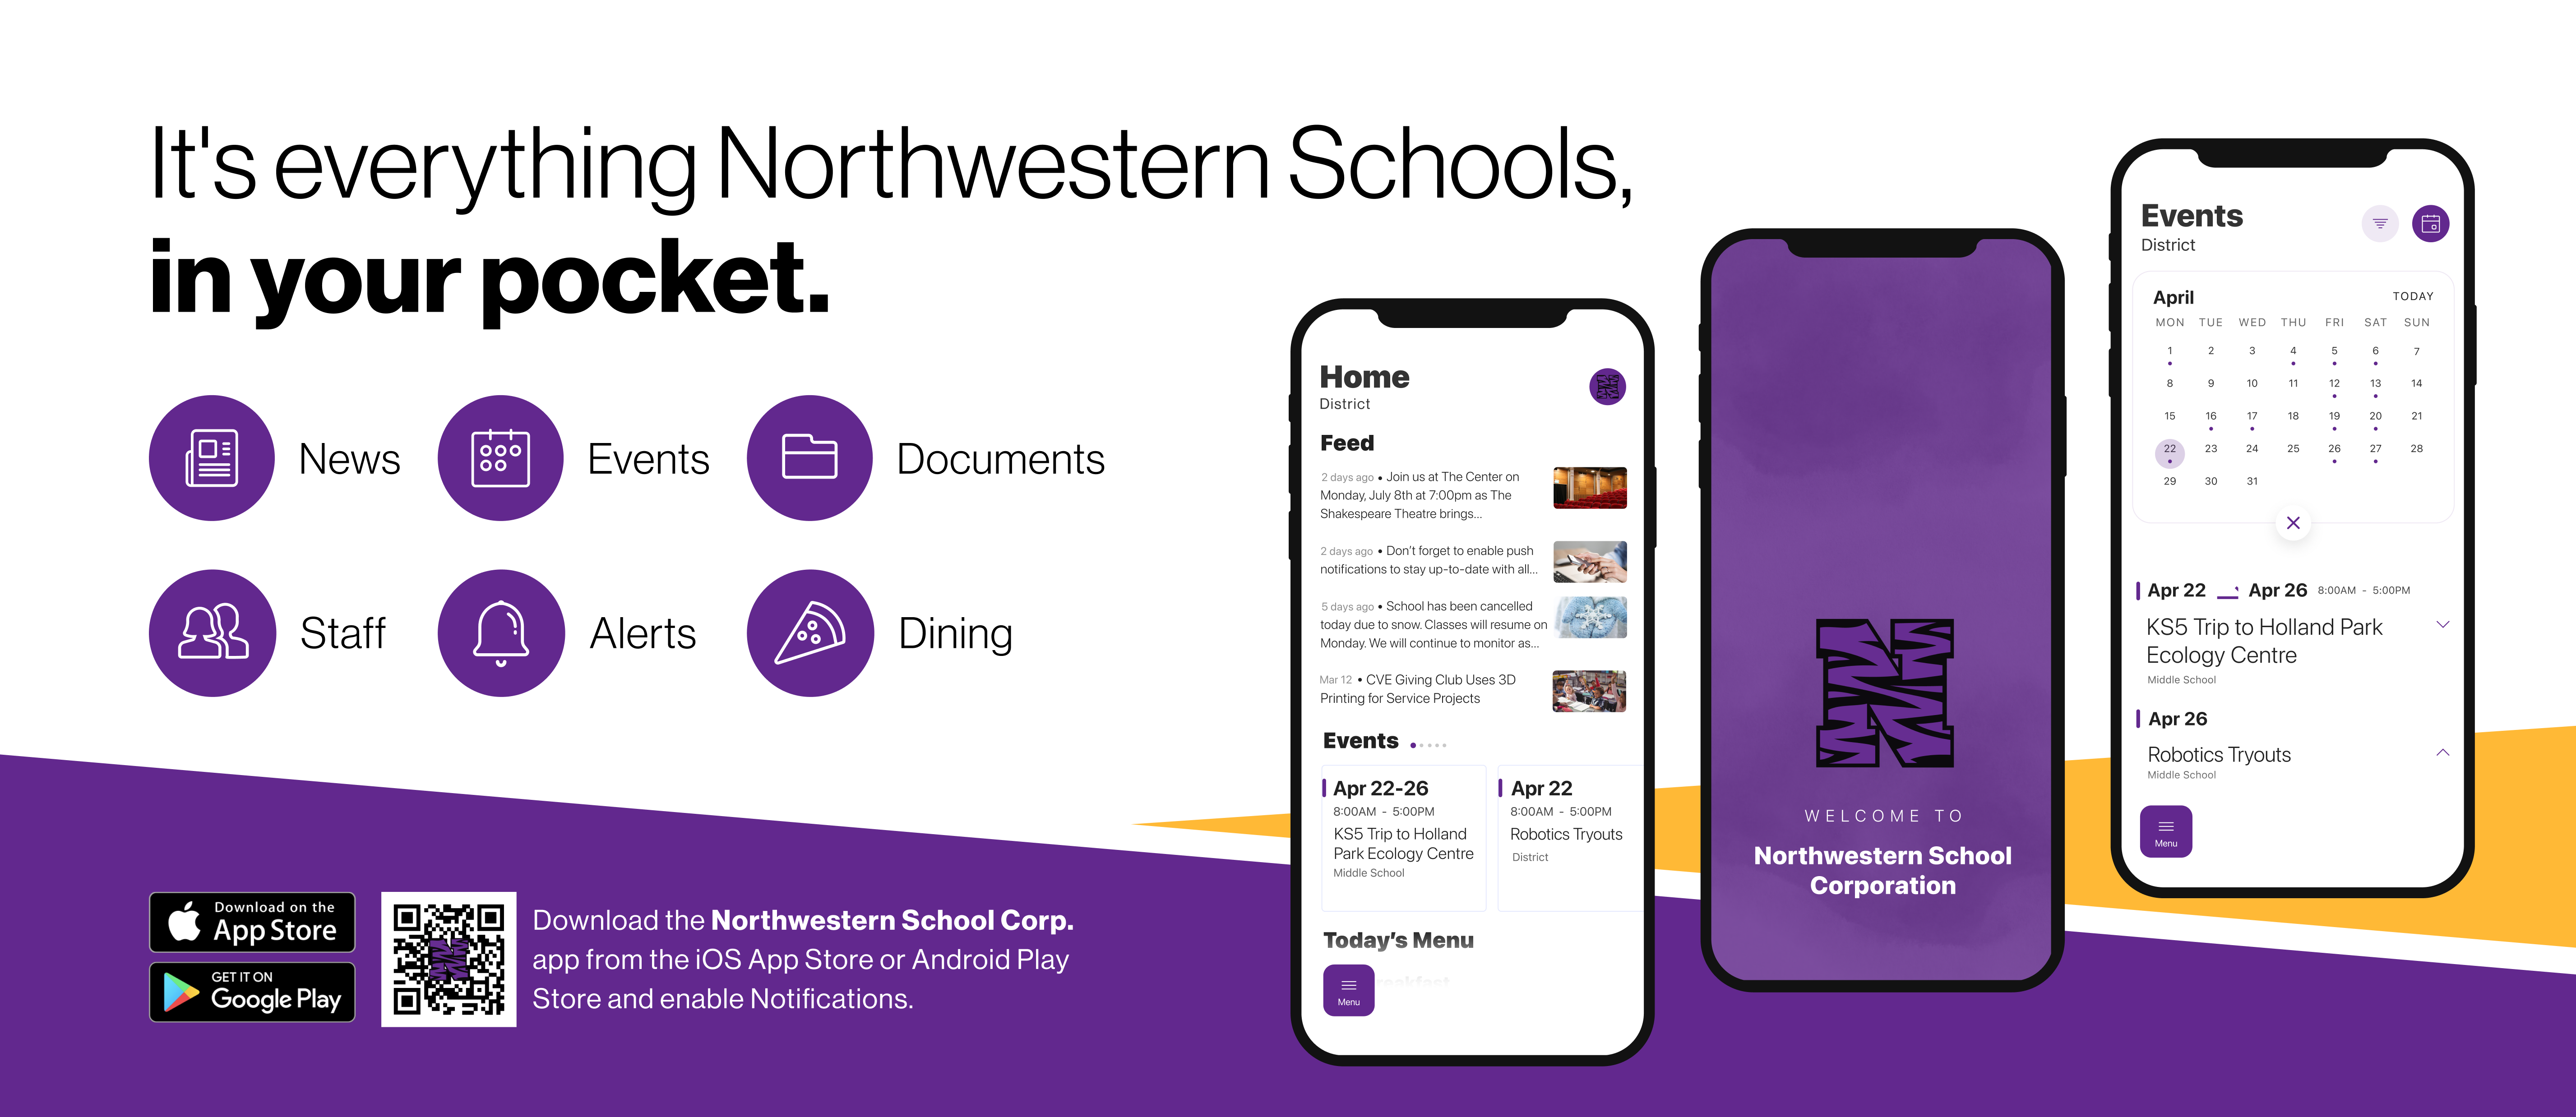 download the northwestern school corp app